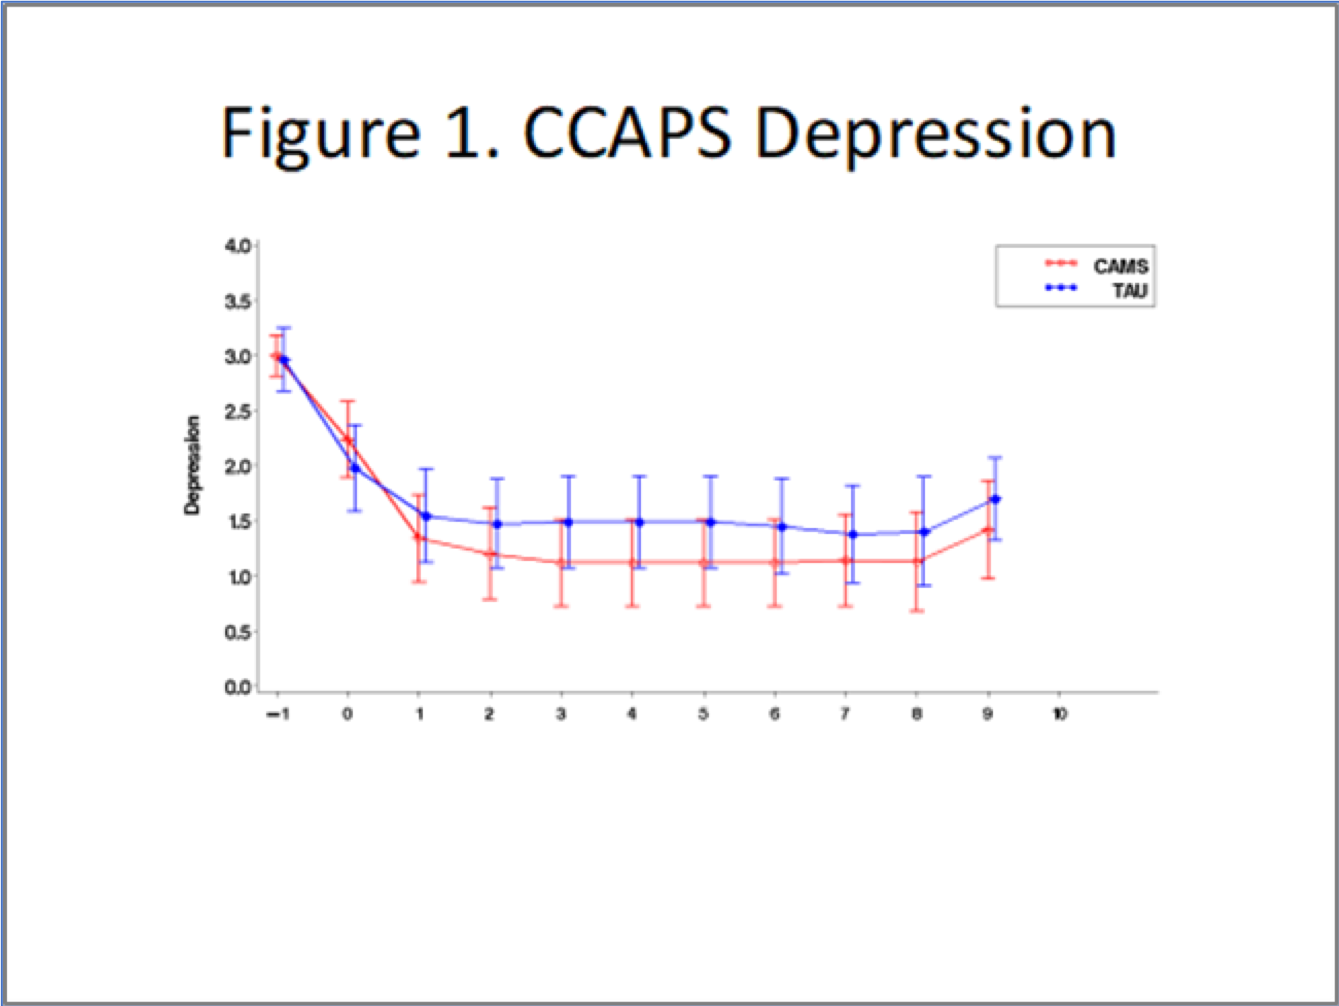 Figure 1. CCAPS Depression; Full description appears after image.